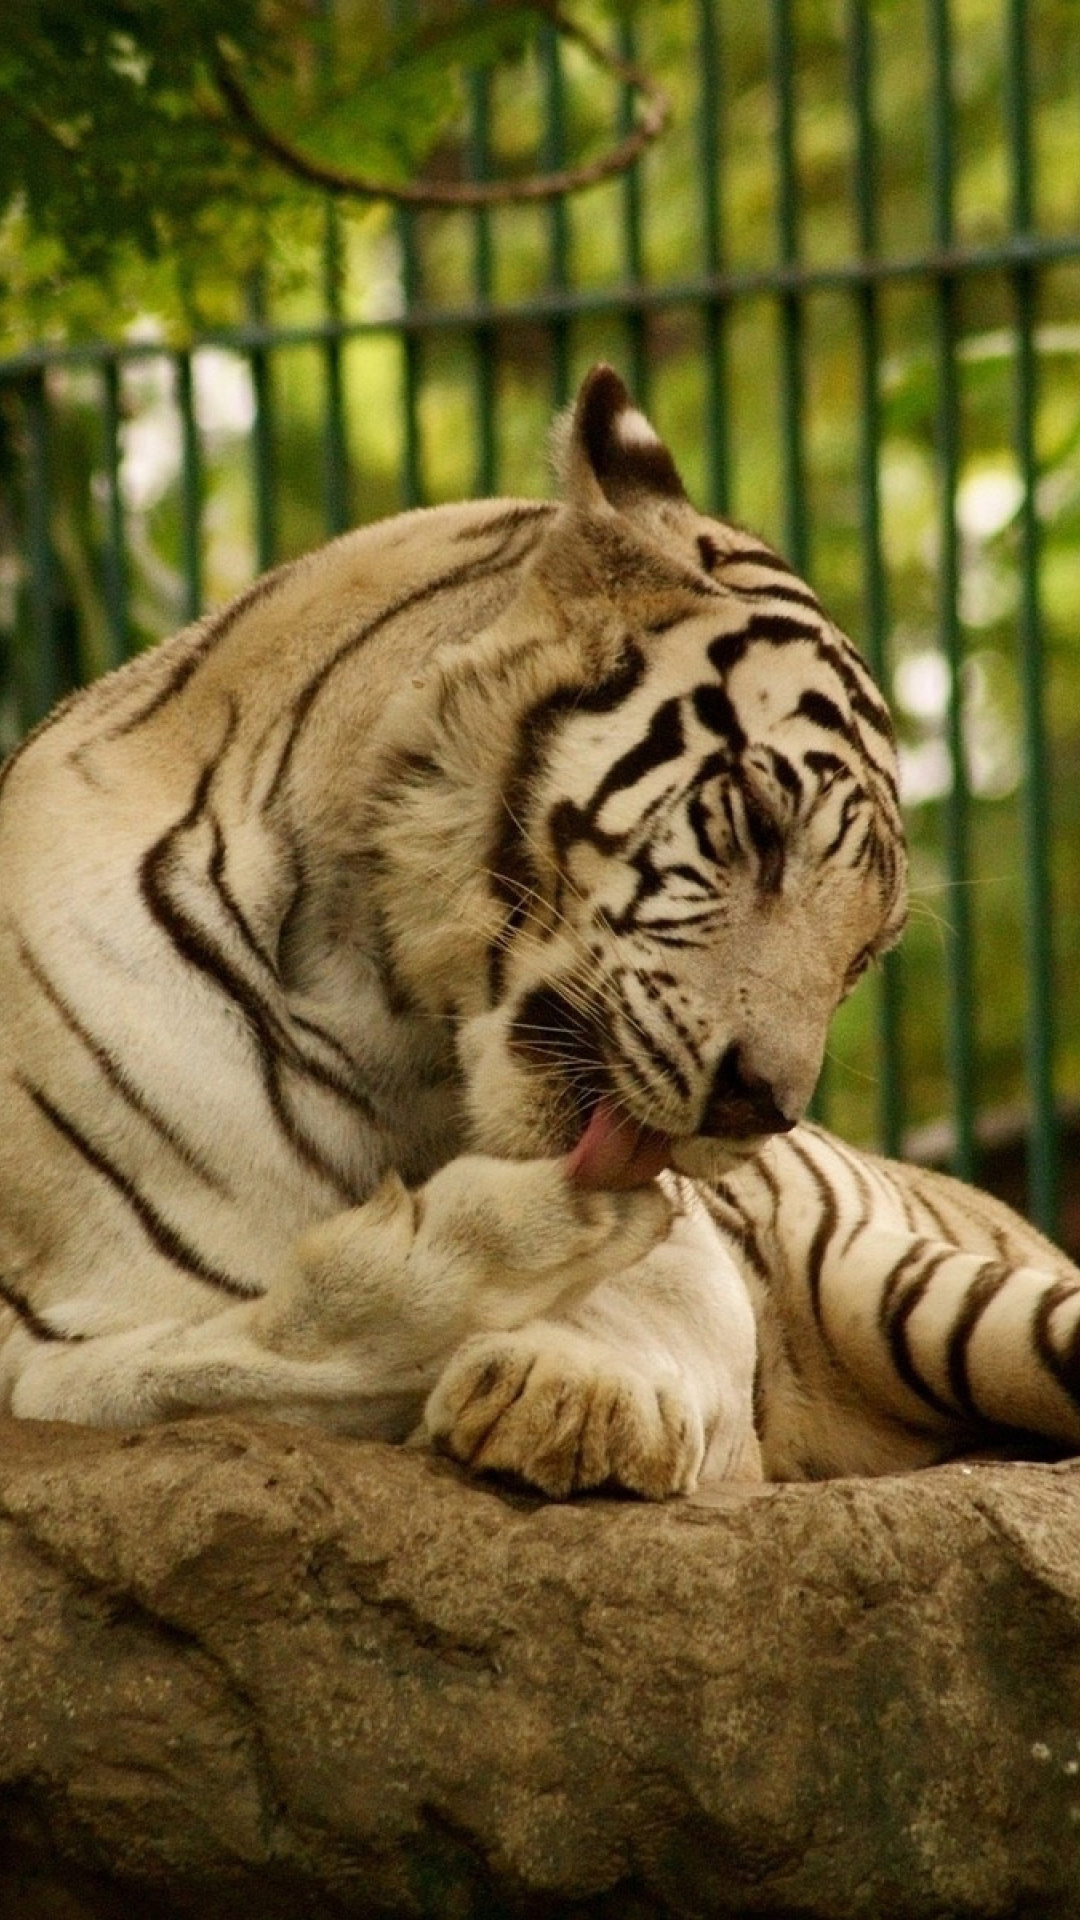 White Tiger in Zoo wallpaper 1080x1920